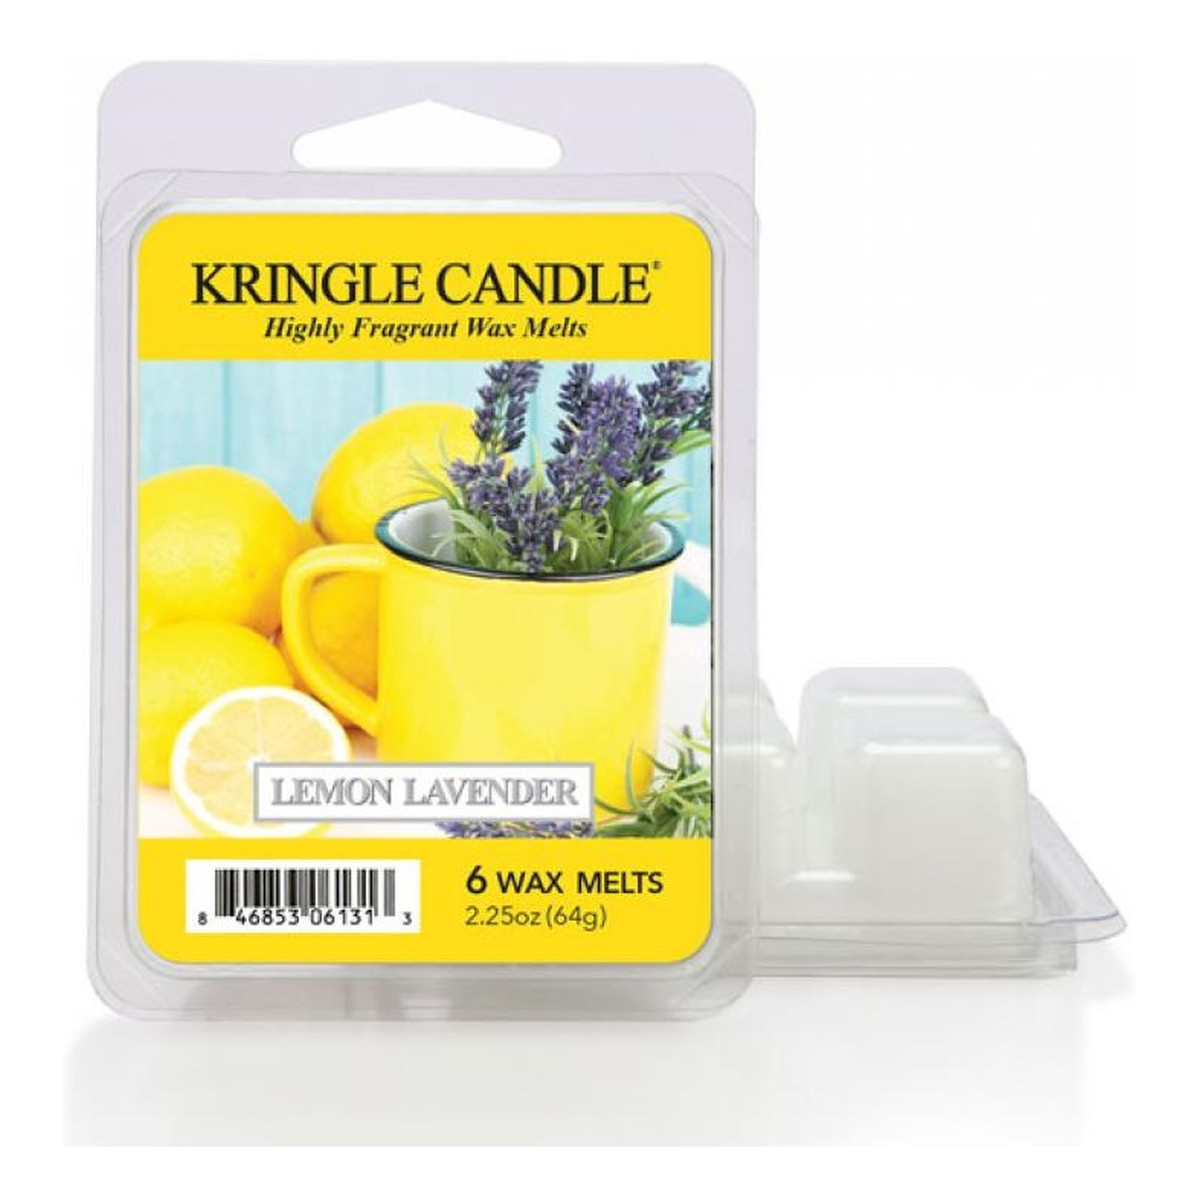 Kringle Candle Wax wosk zapachowy "potpourri" lemon lavender 64g